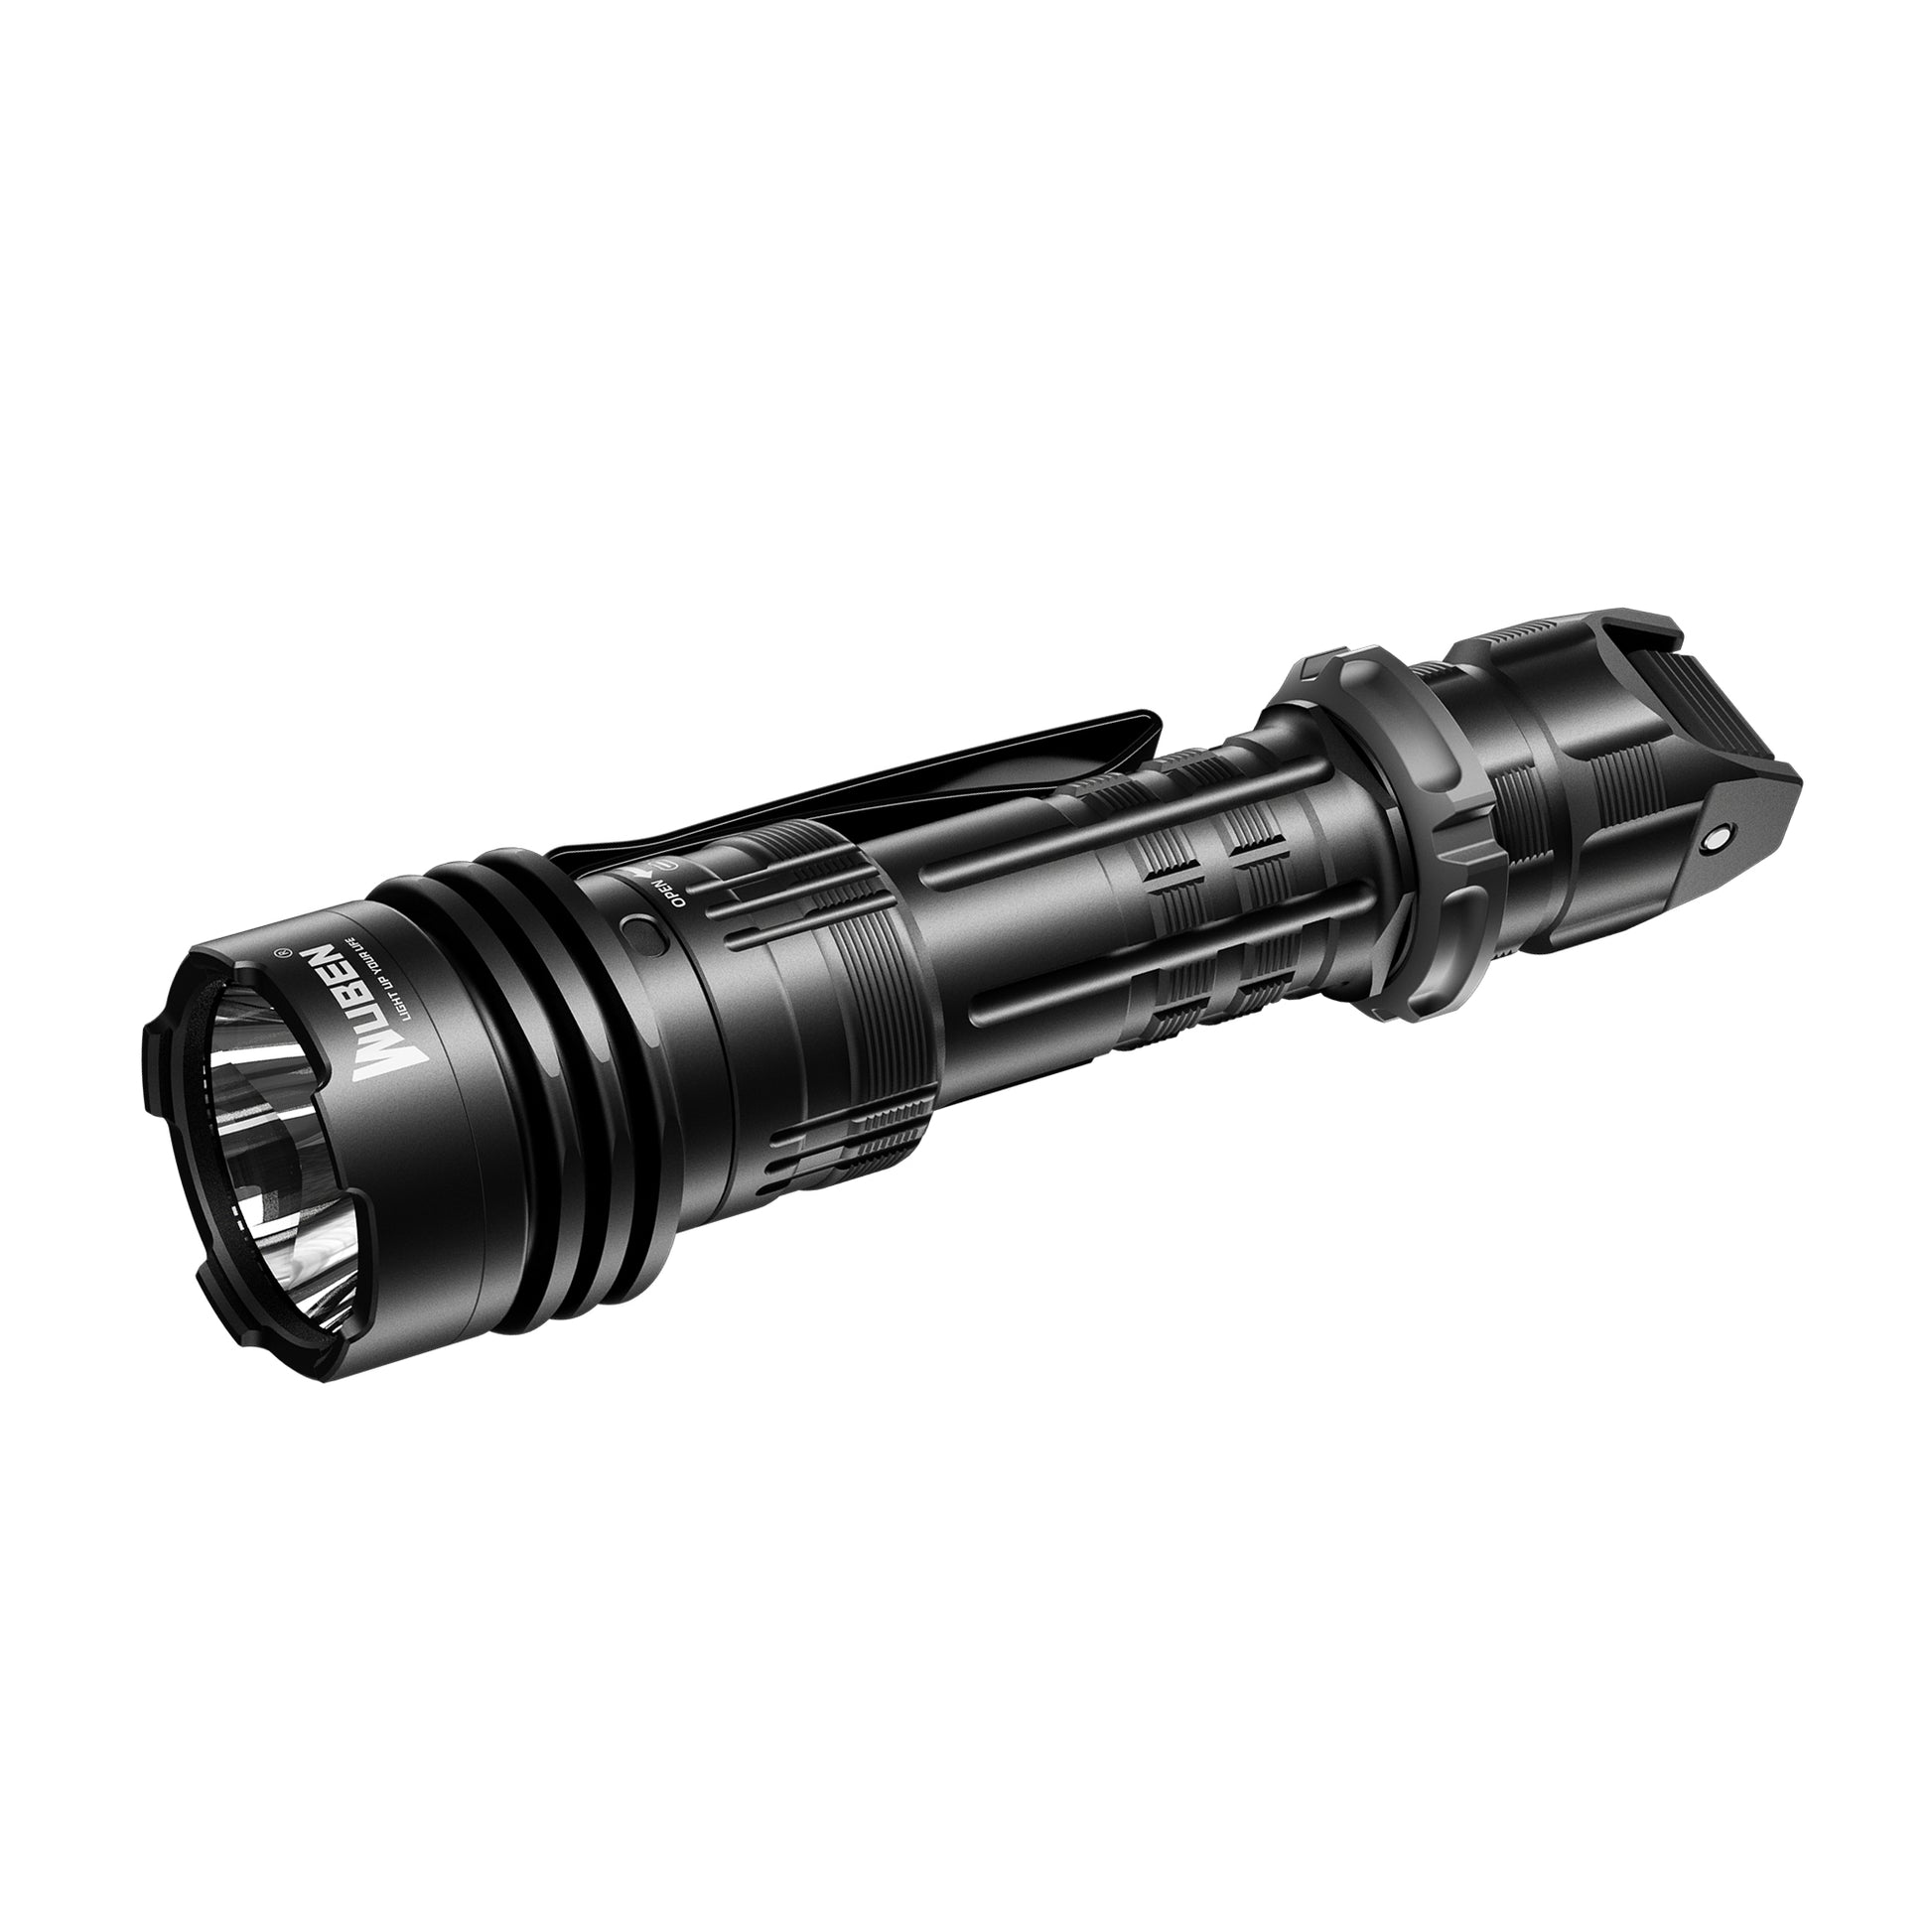 Wuben T1 flashlight